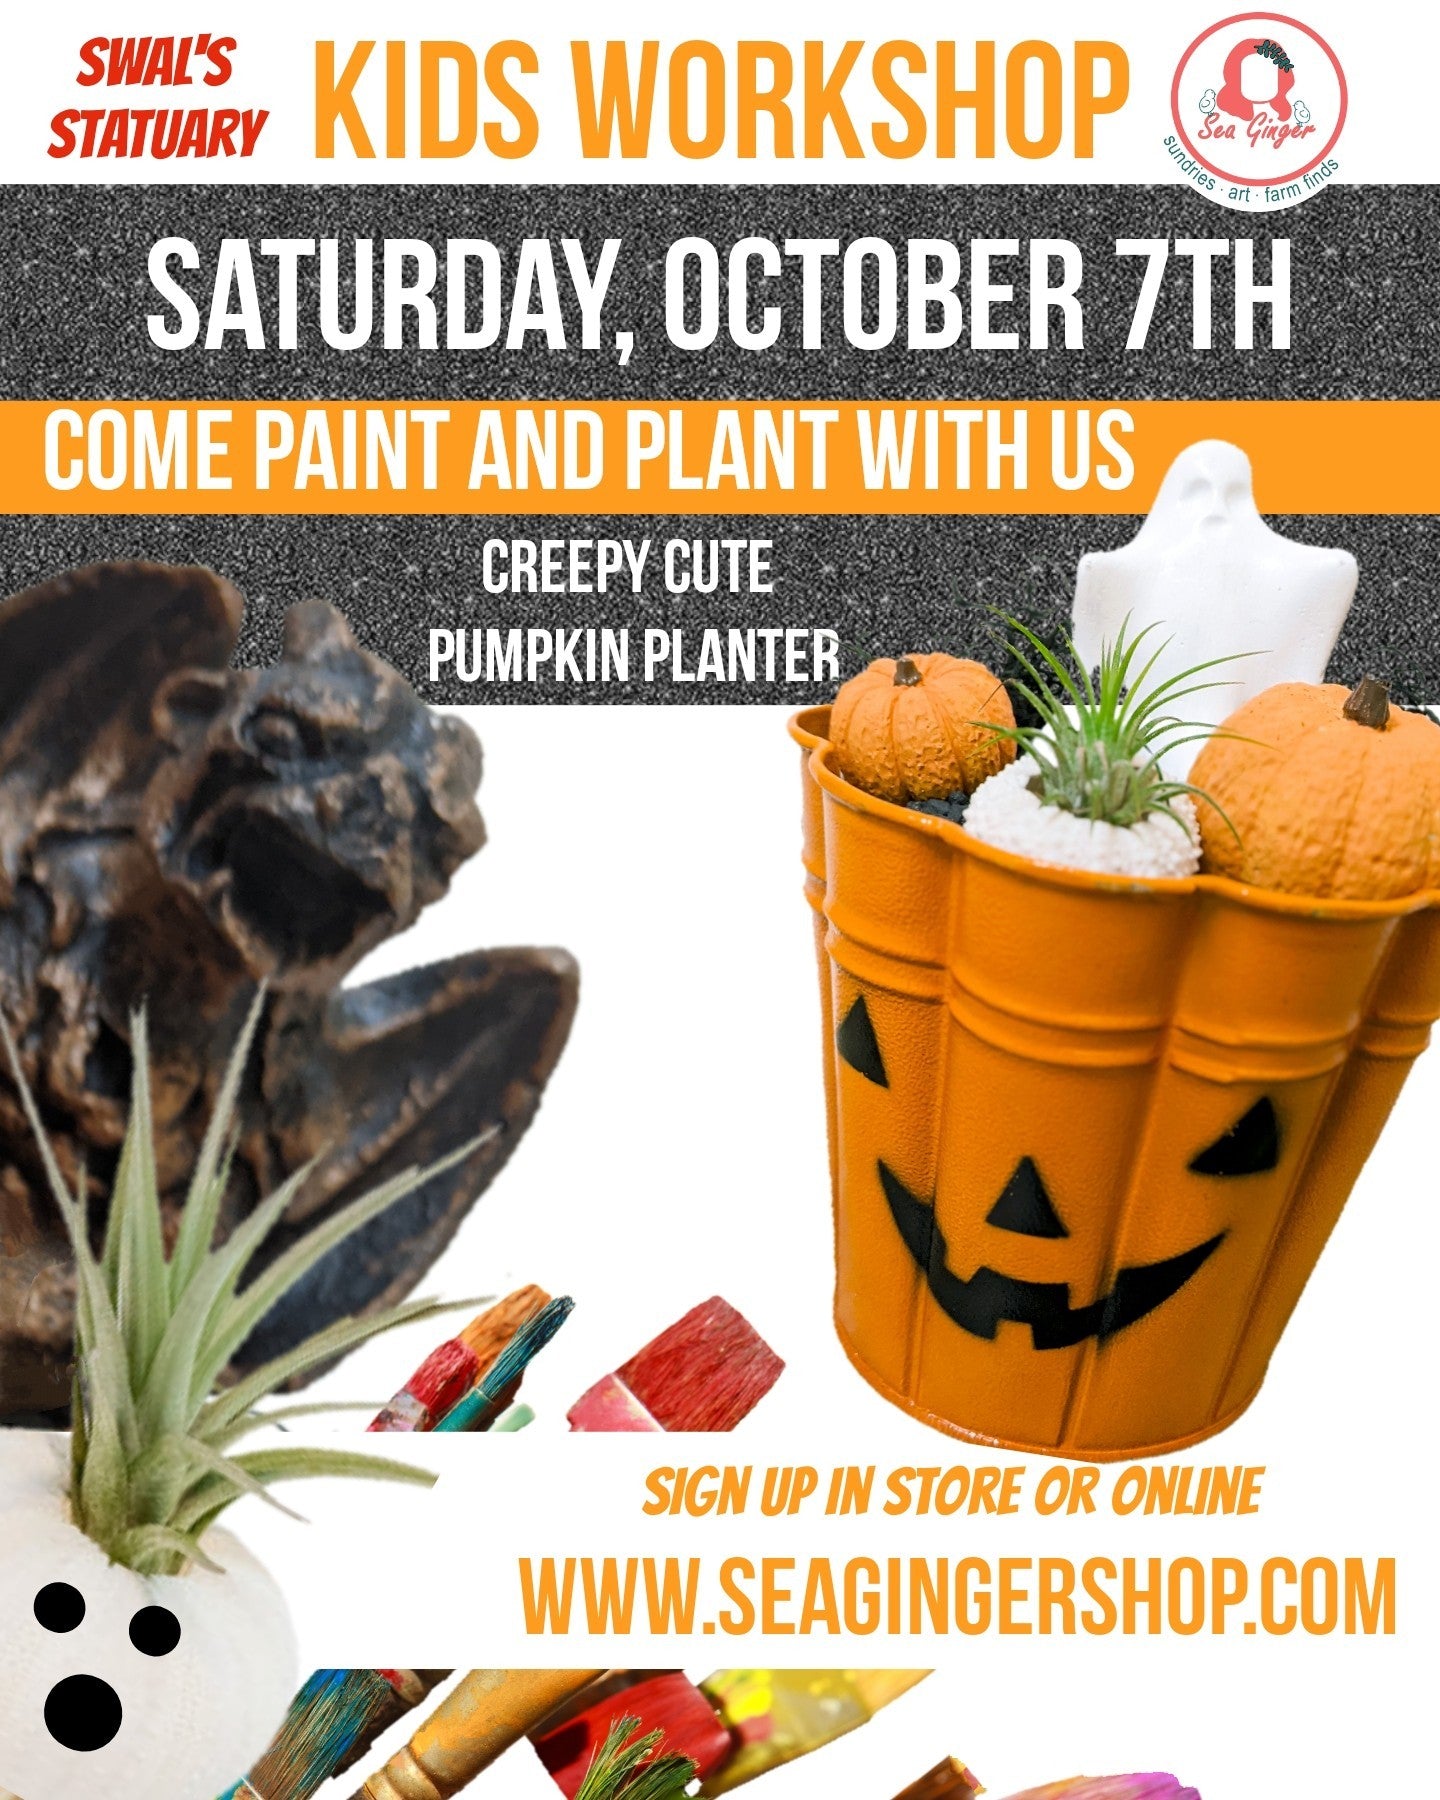 Creepy Cute Pumpkin Planter Workshop Saturday October, 7th